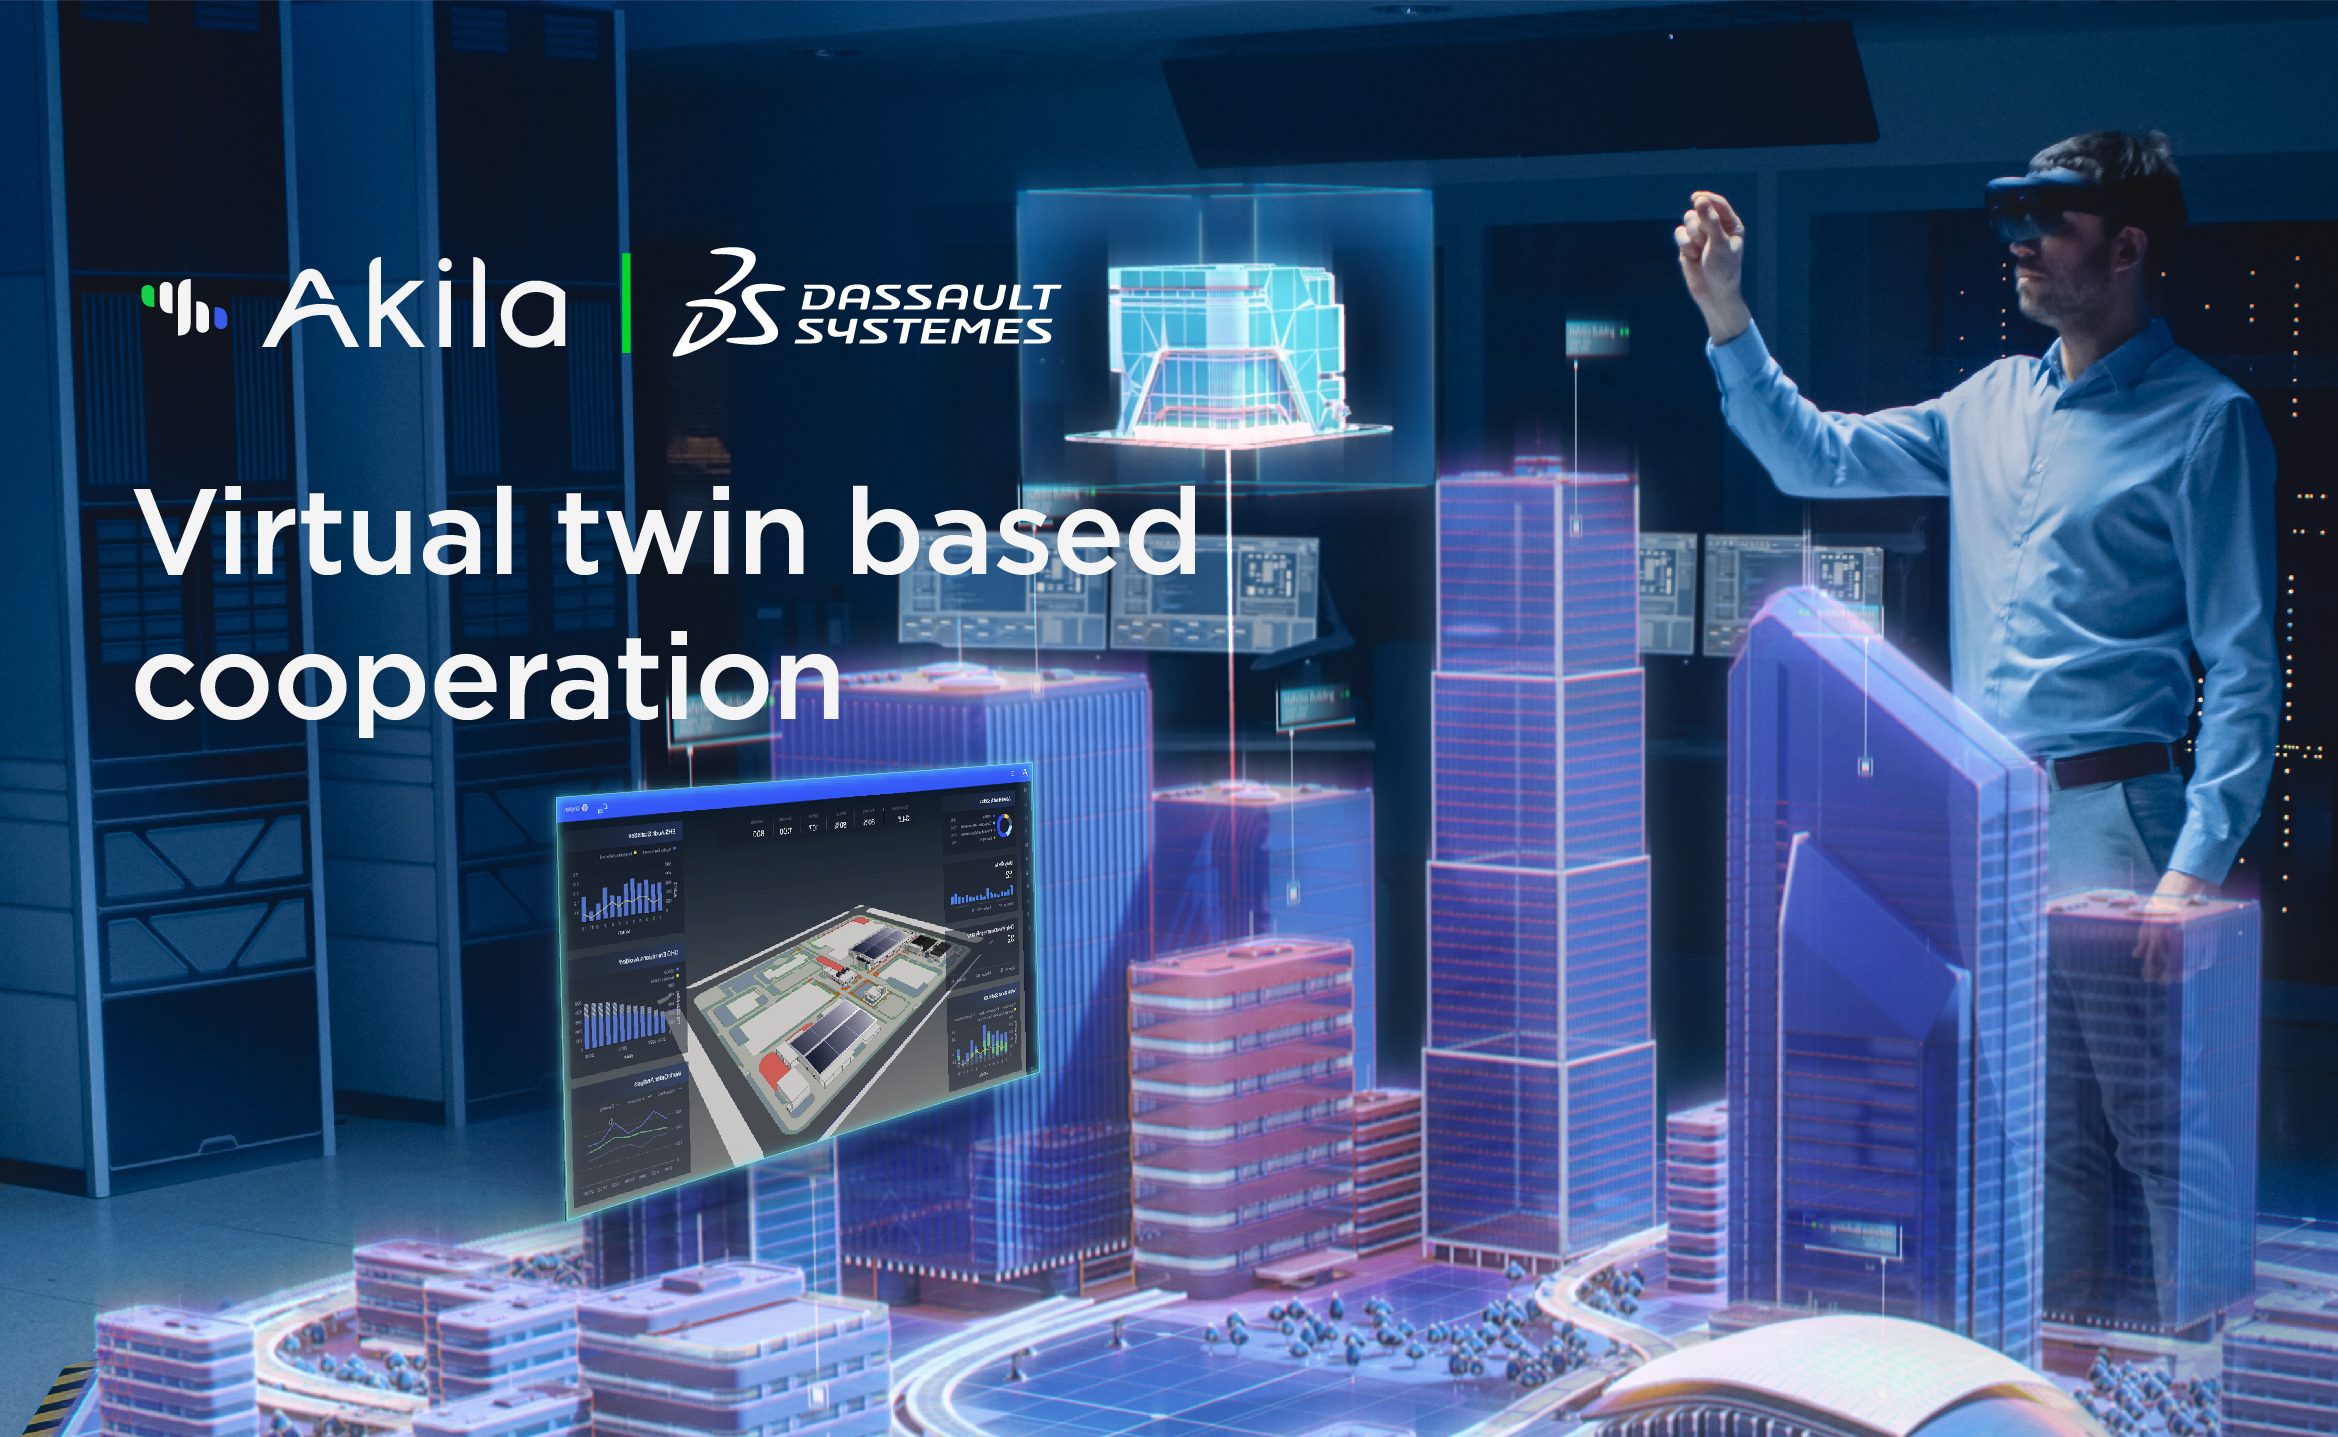 Akila 와 Dassault Systemes, 구축 환경 ESG 성능을 위한 가상 트윈 기반 협력을 발표